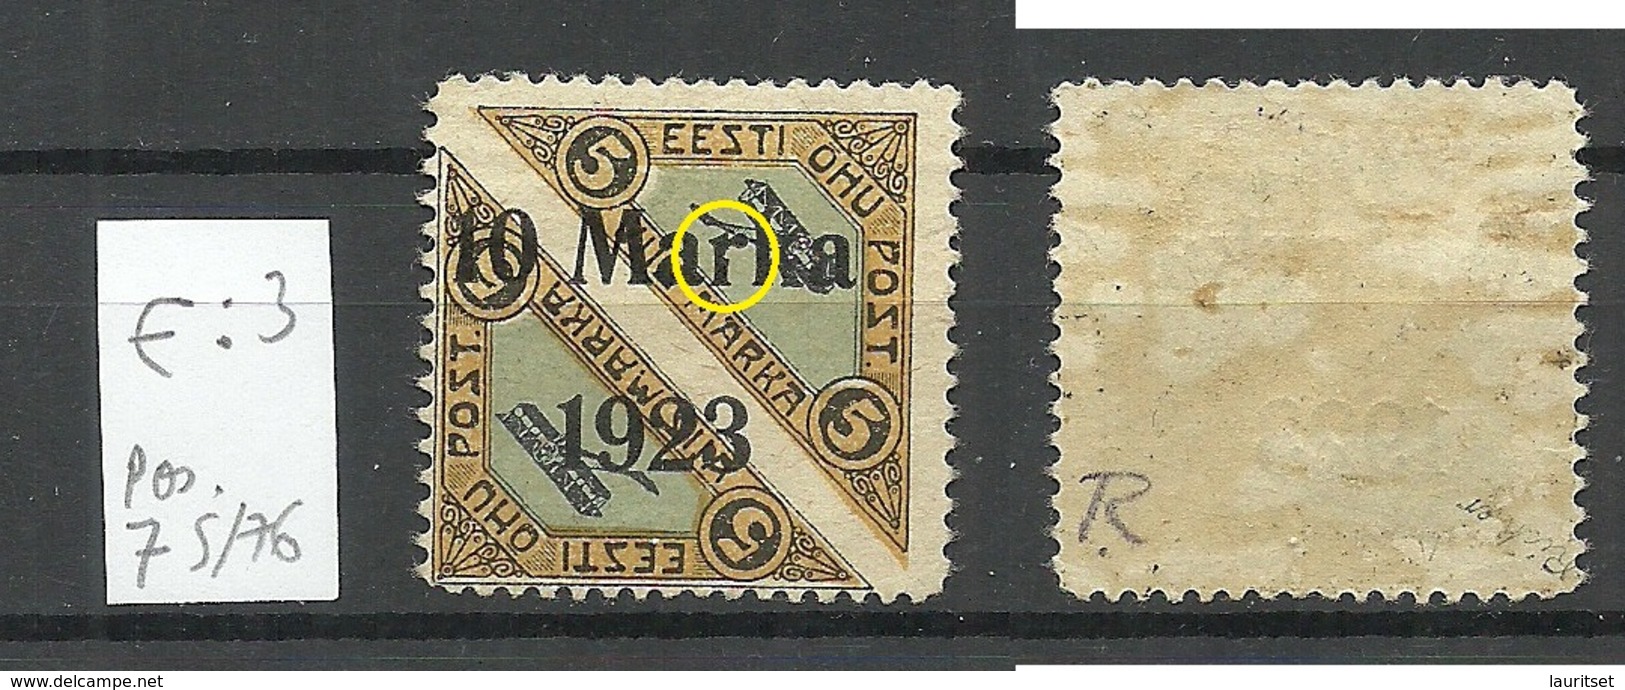 ESTLAND ESTONIA 1923 Michel 43 B E: 3 ERROR Abart Variety * Signed Richter - Estland